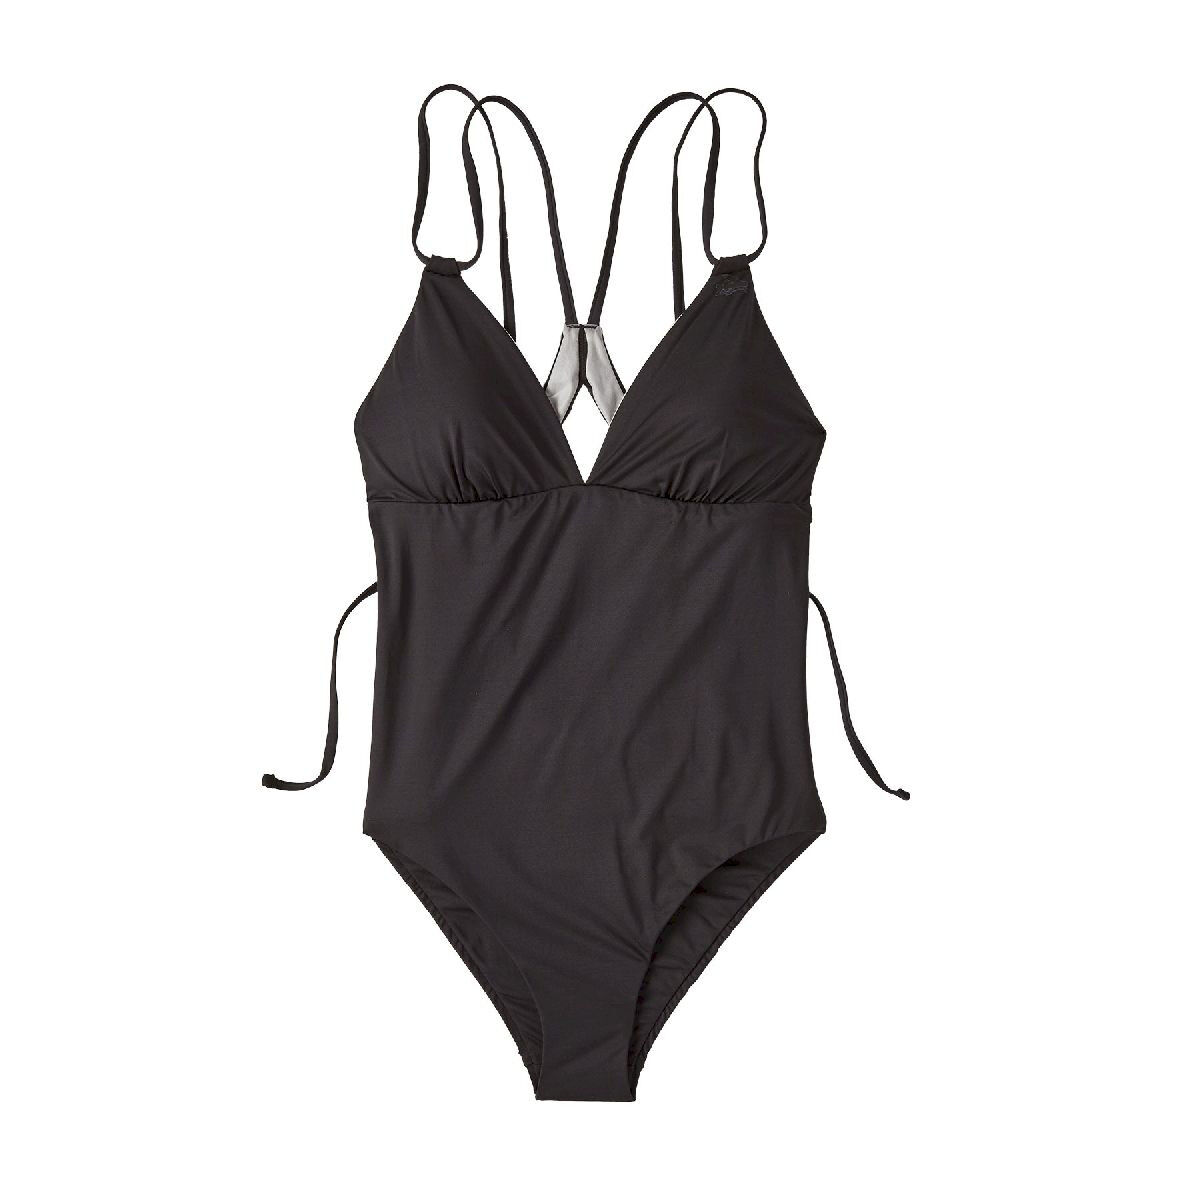 Patagonia Nanogrip Sunset Swell 1pc Swimsuit - Bañador - Mujer